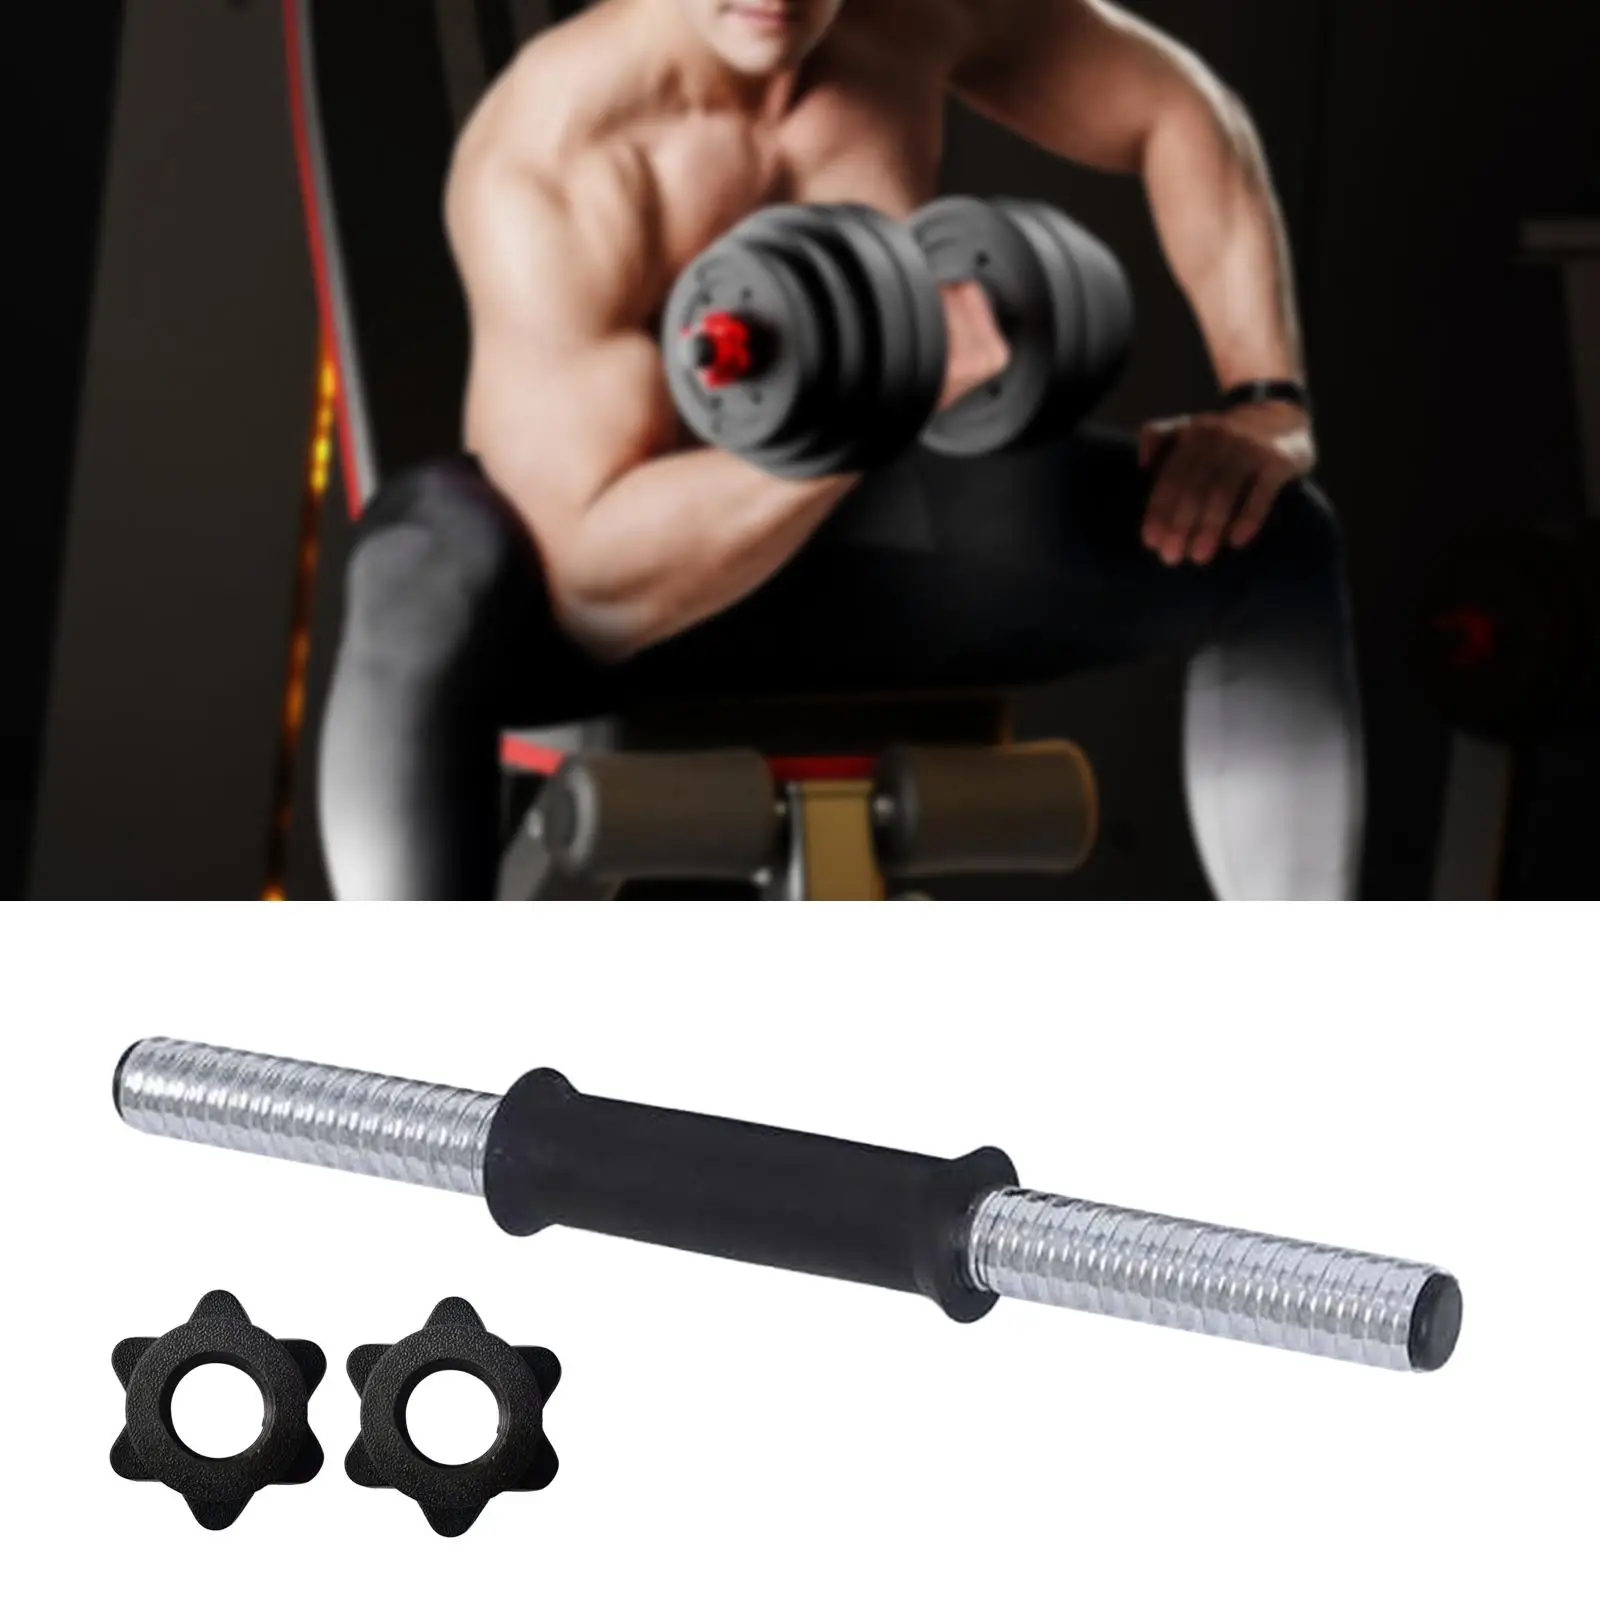 Dumbbell Bar Fitness Equipment Bodybuilding for Exercise Sport Weightlifting